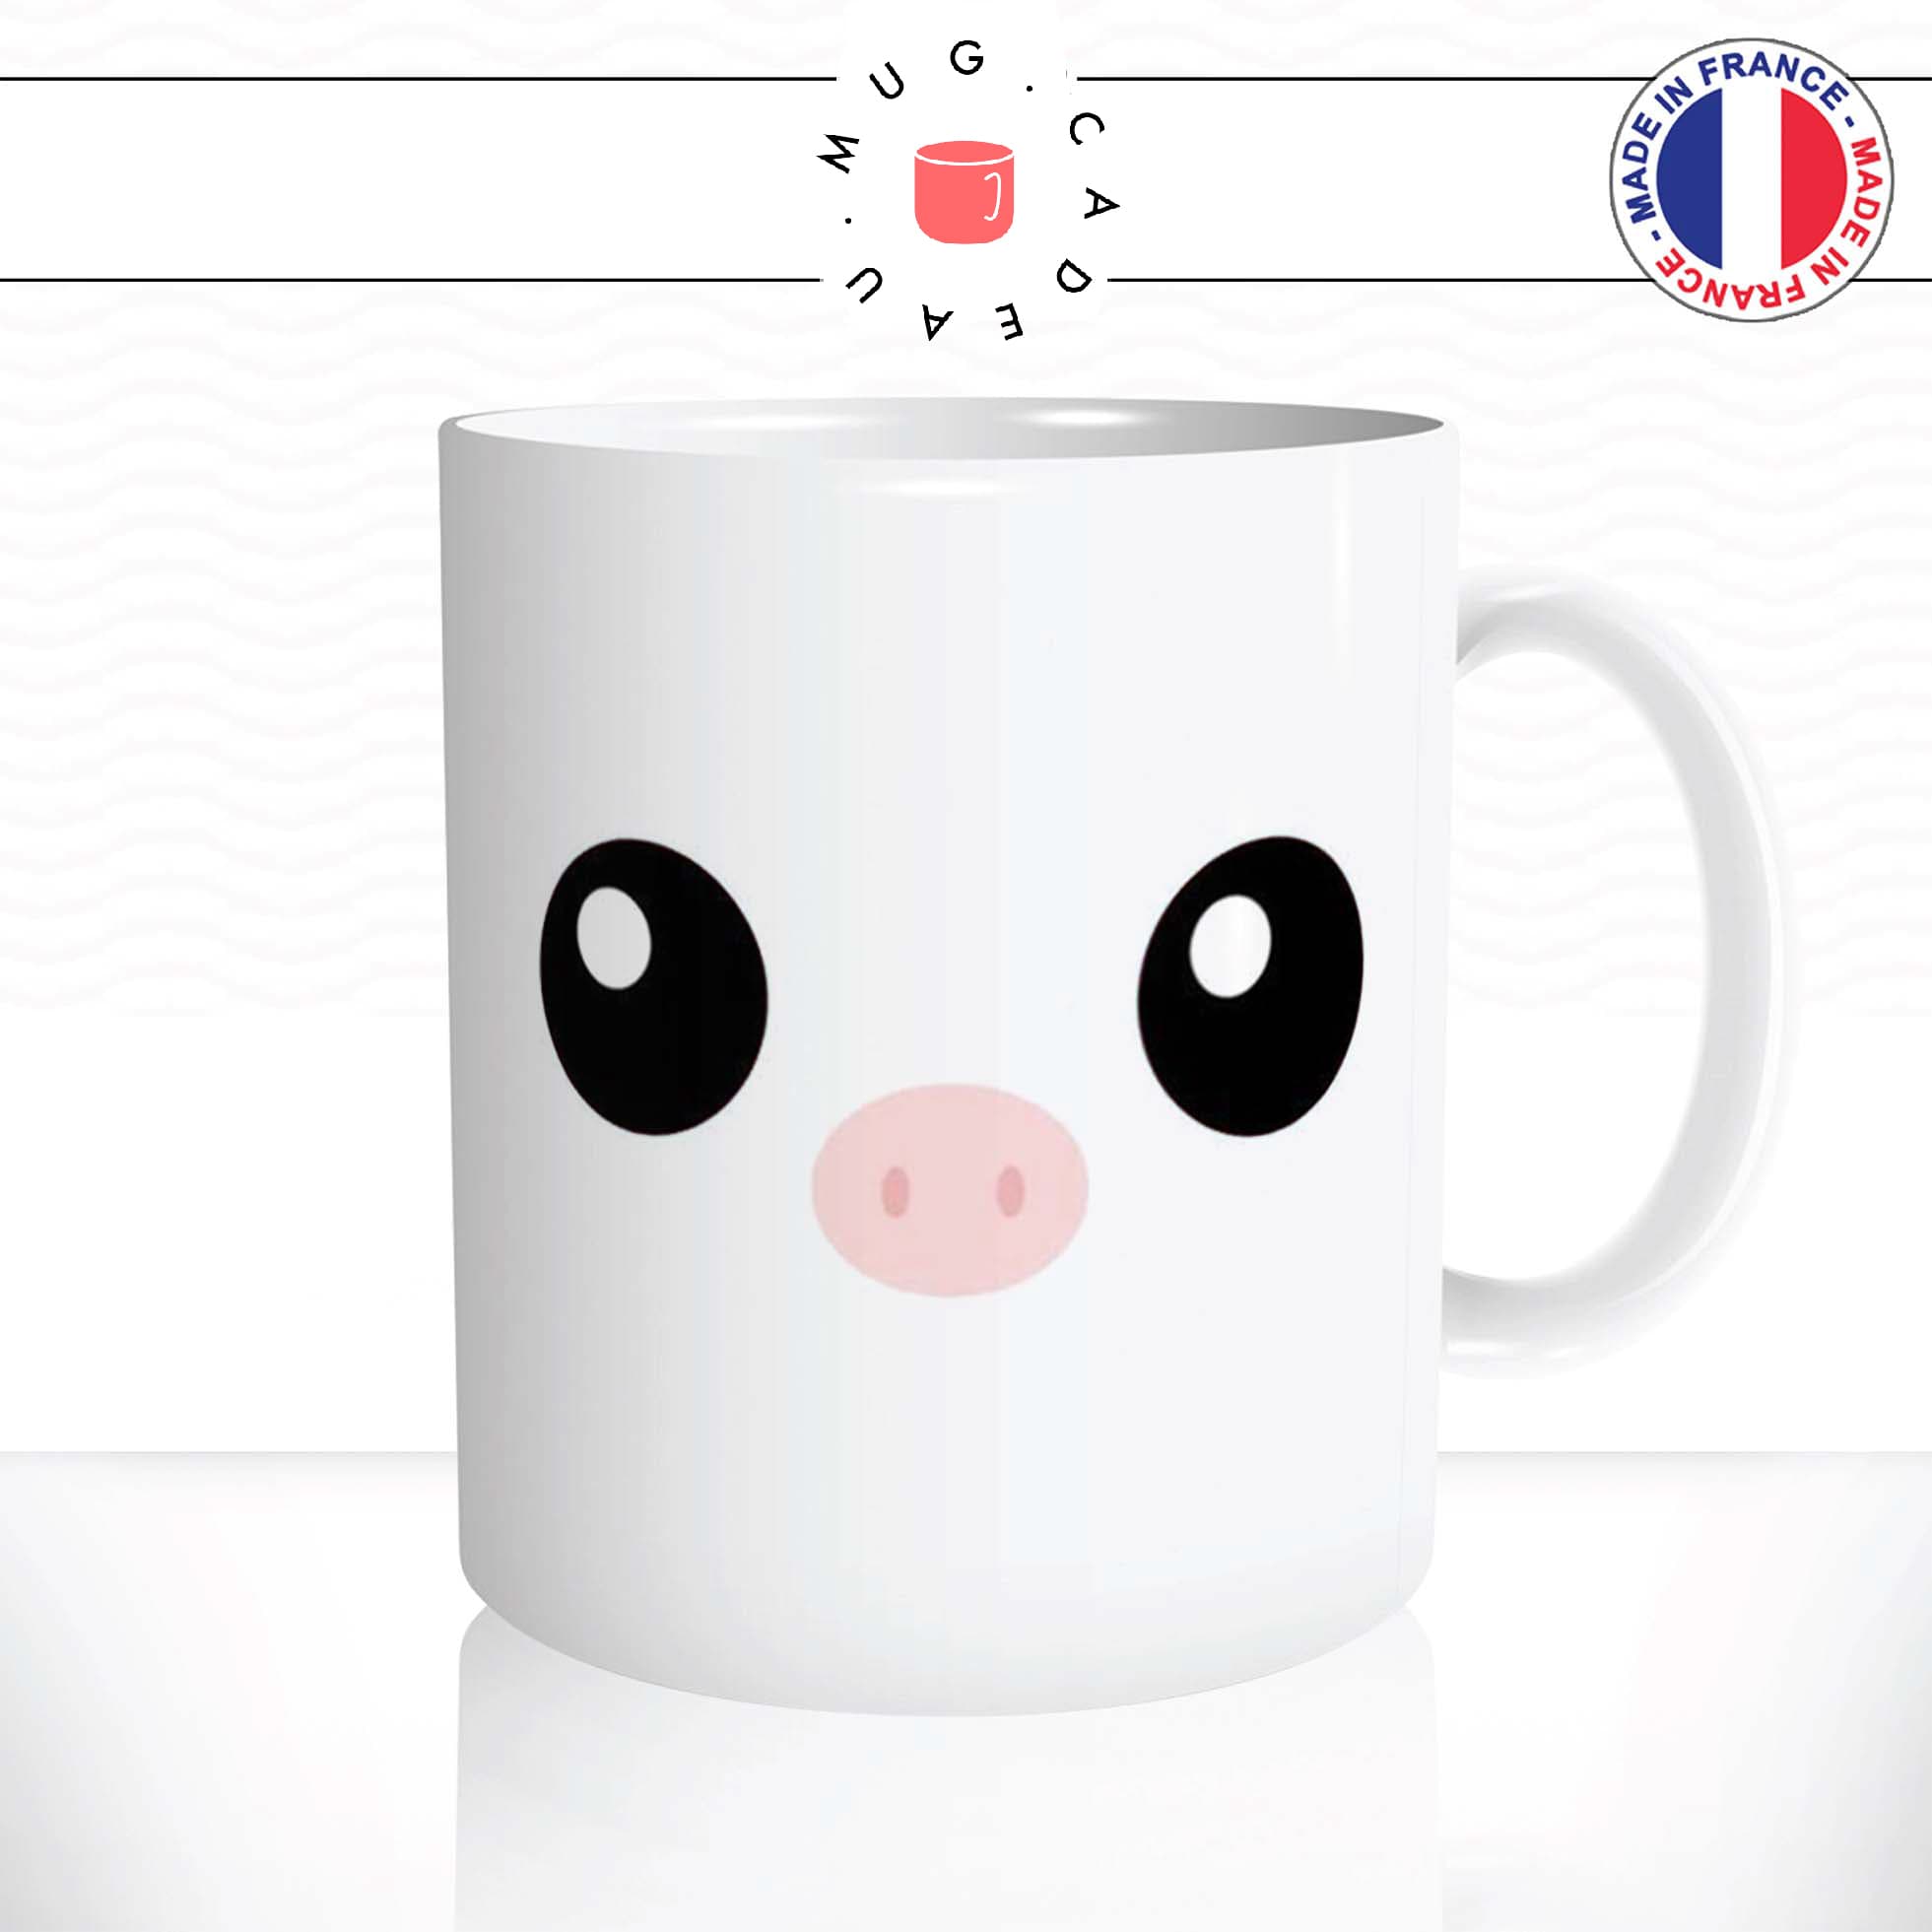 mug-tasse-ref1-cochon-yeux-nez-cute-cafe-the-mugs-tasses-personnalise-anse-droite-min